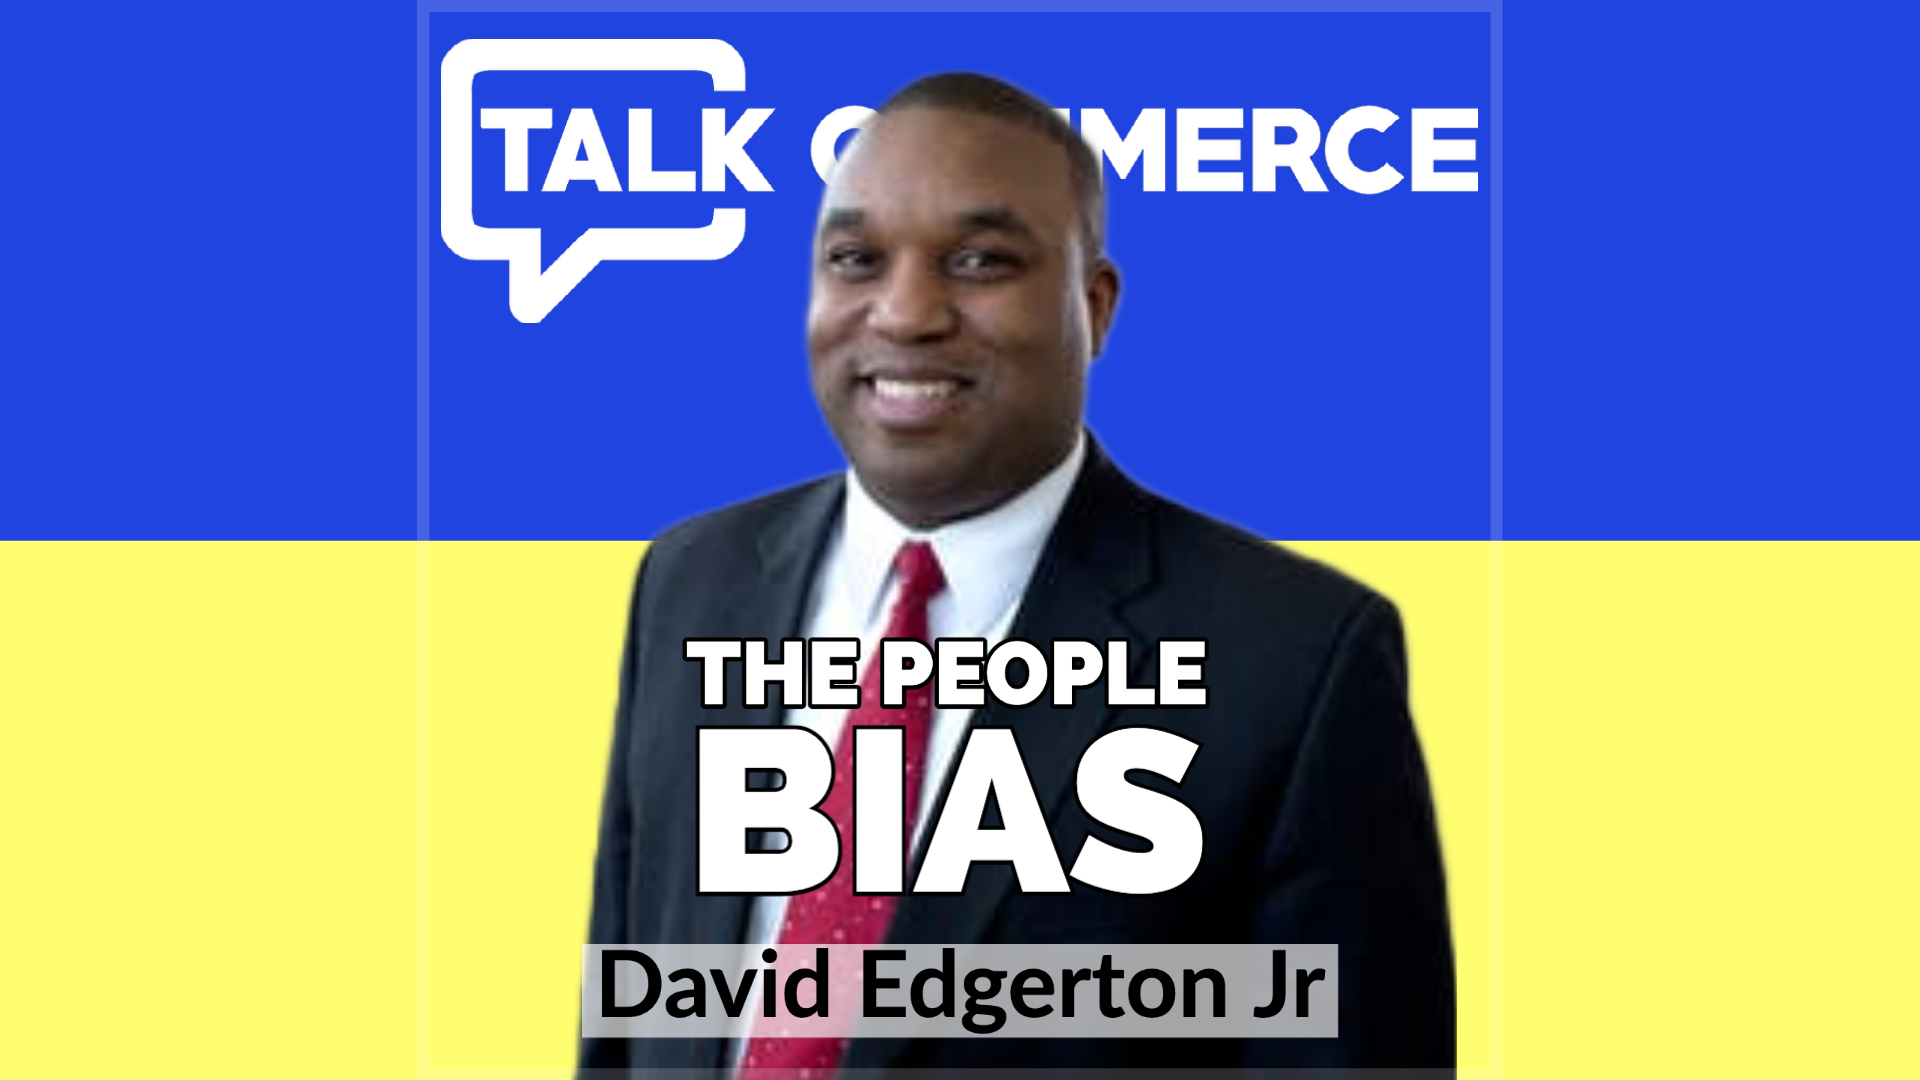 Talk-Commerce David Edgerton Jr